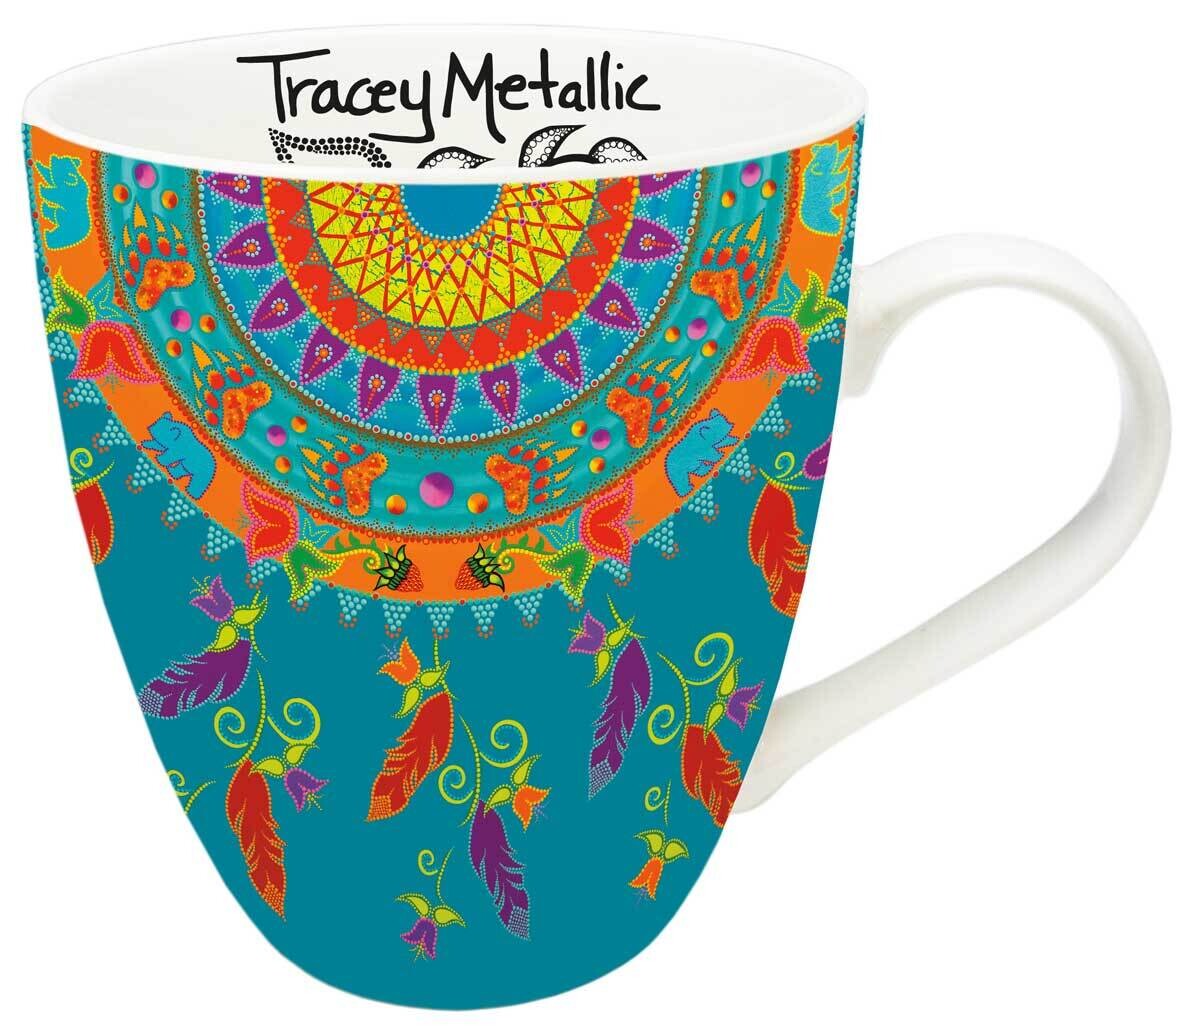 Tracey Metallic- High Spirits Mug